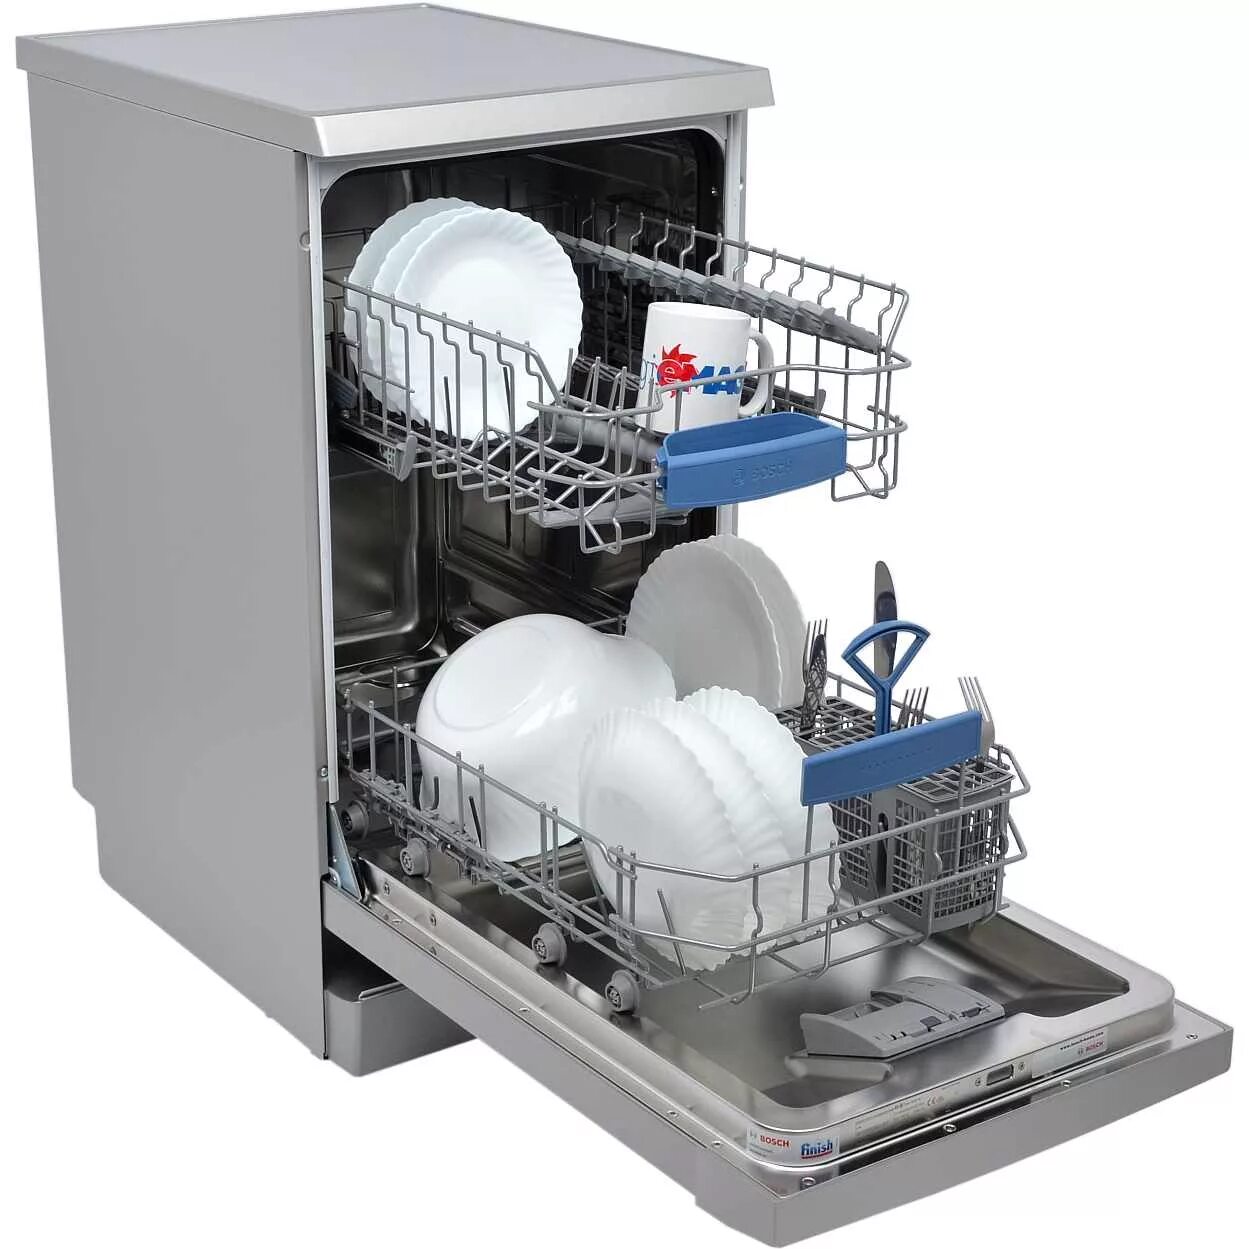 Купить посудомоечную машину видео. Посудомоечная машина Bosch sps2ikw1br. Посудомоечная машина Neff s855hmx50r. ПММ бош sps53. Посудомоечная машина Bosch spv6hmx1mr.